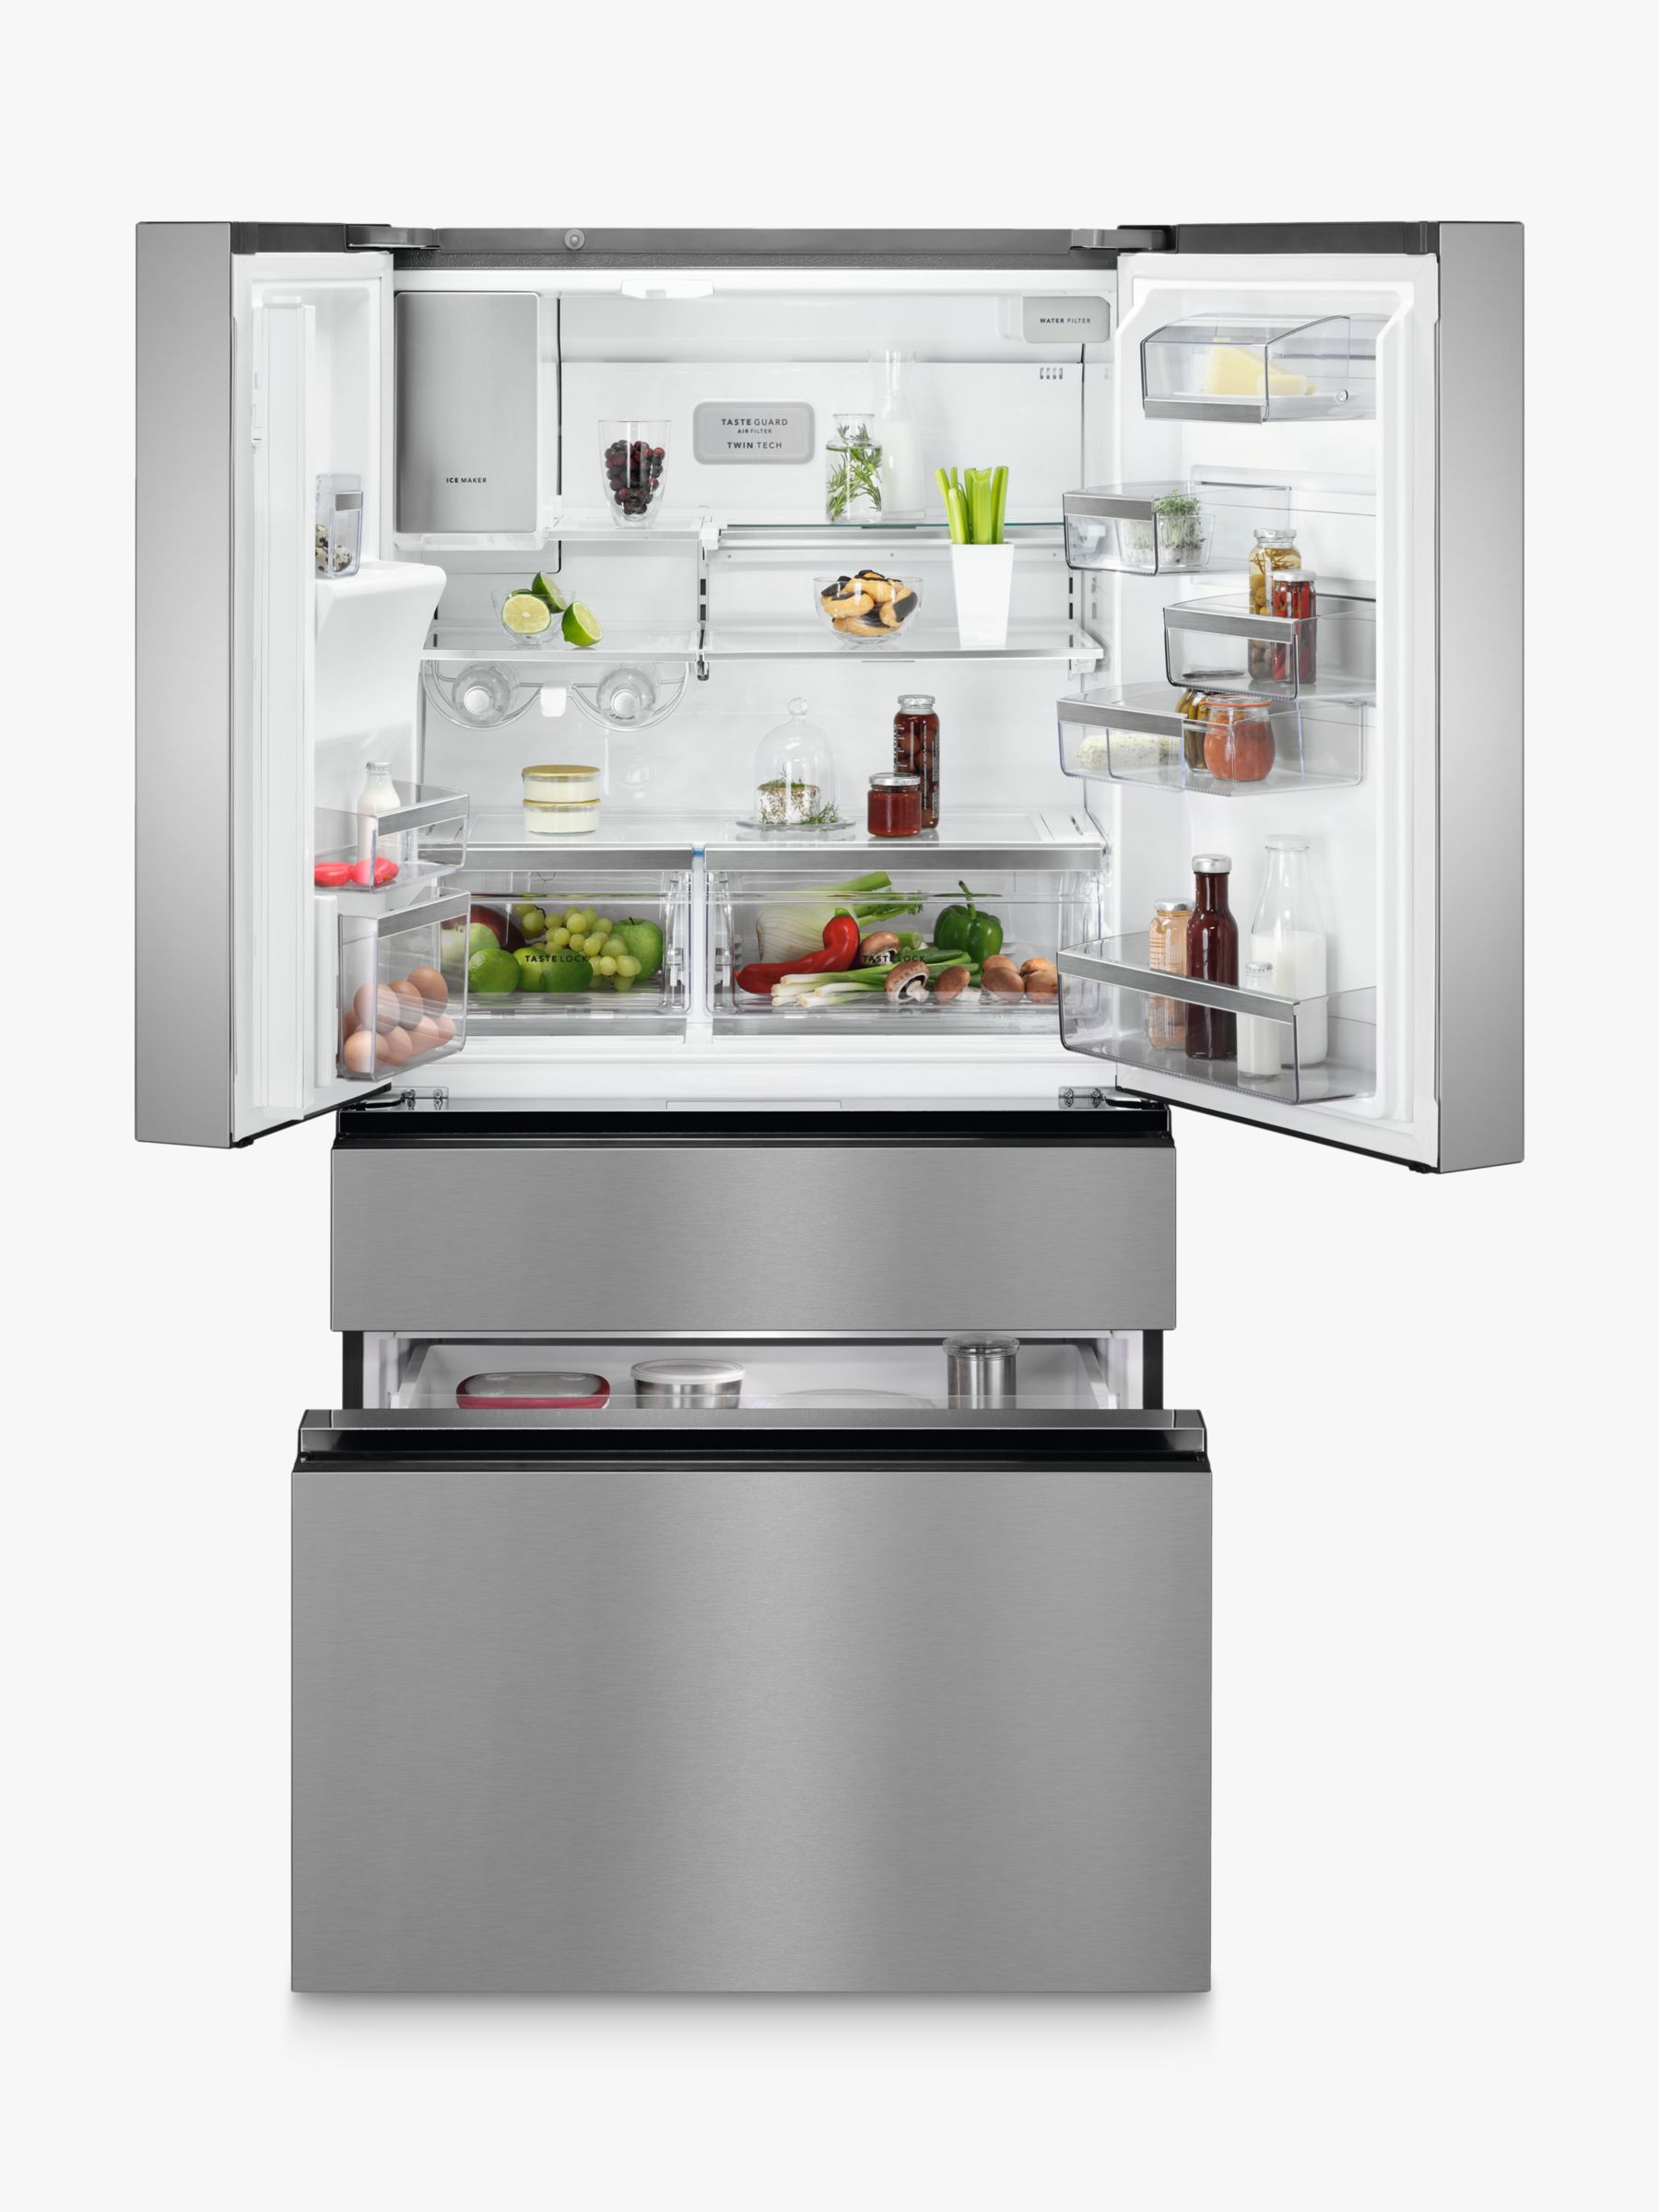 24++ Aeg side by side fridge freezer rmb76111nx info